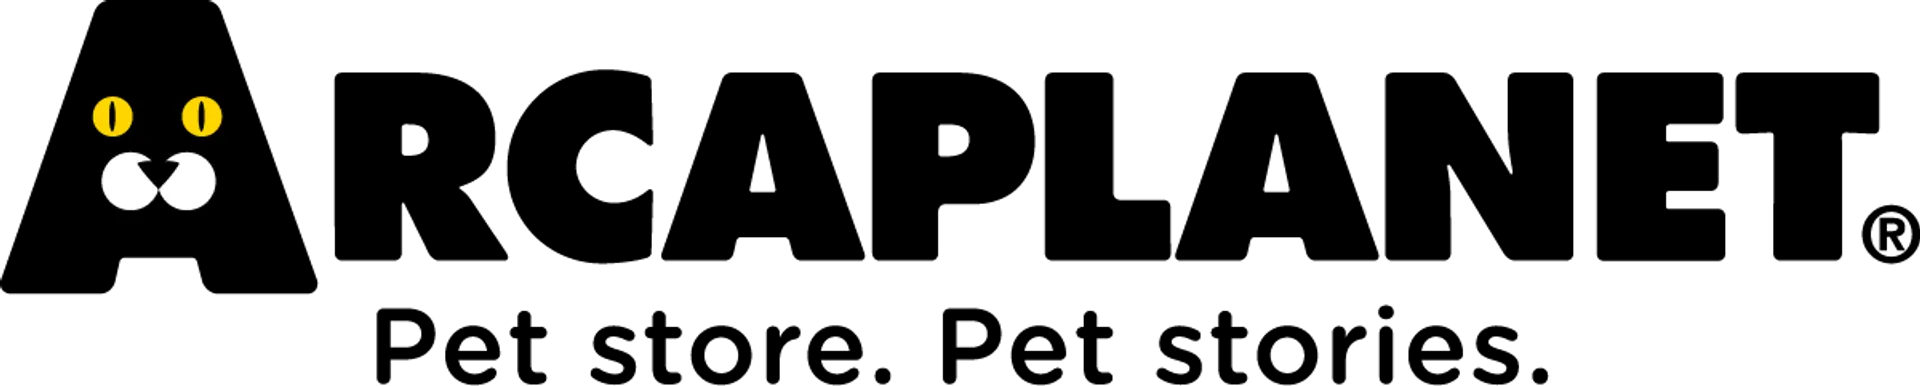 ARCAPLANET logo